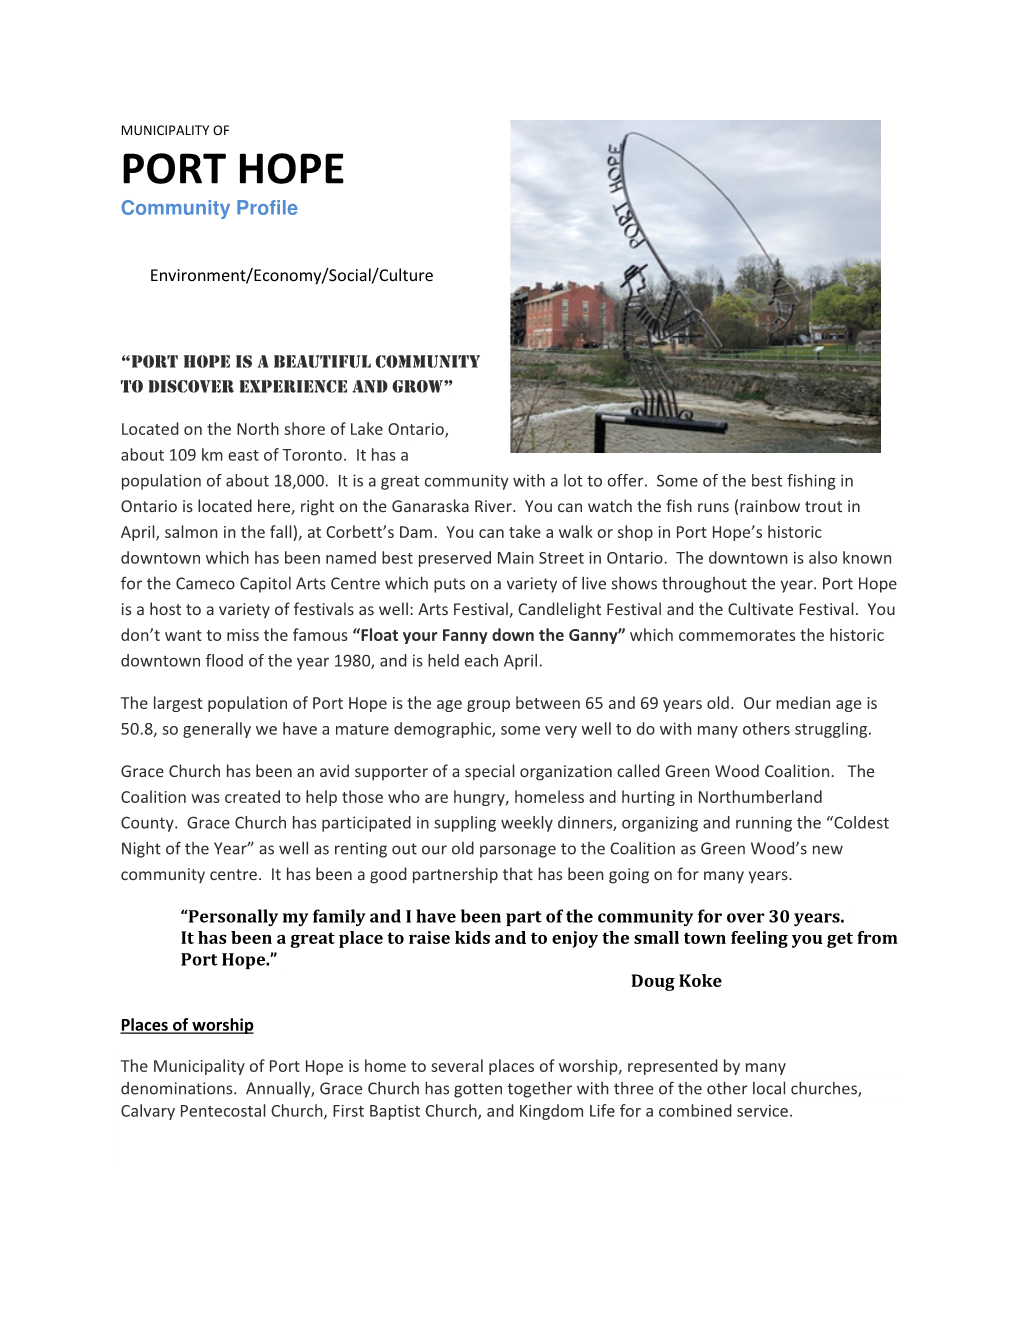 PORT HOPE Community Profile